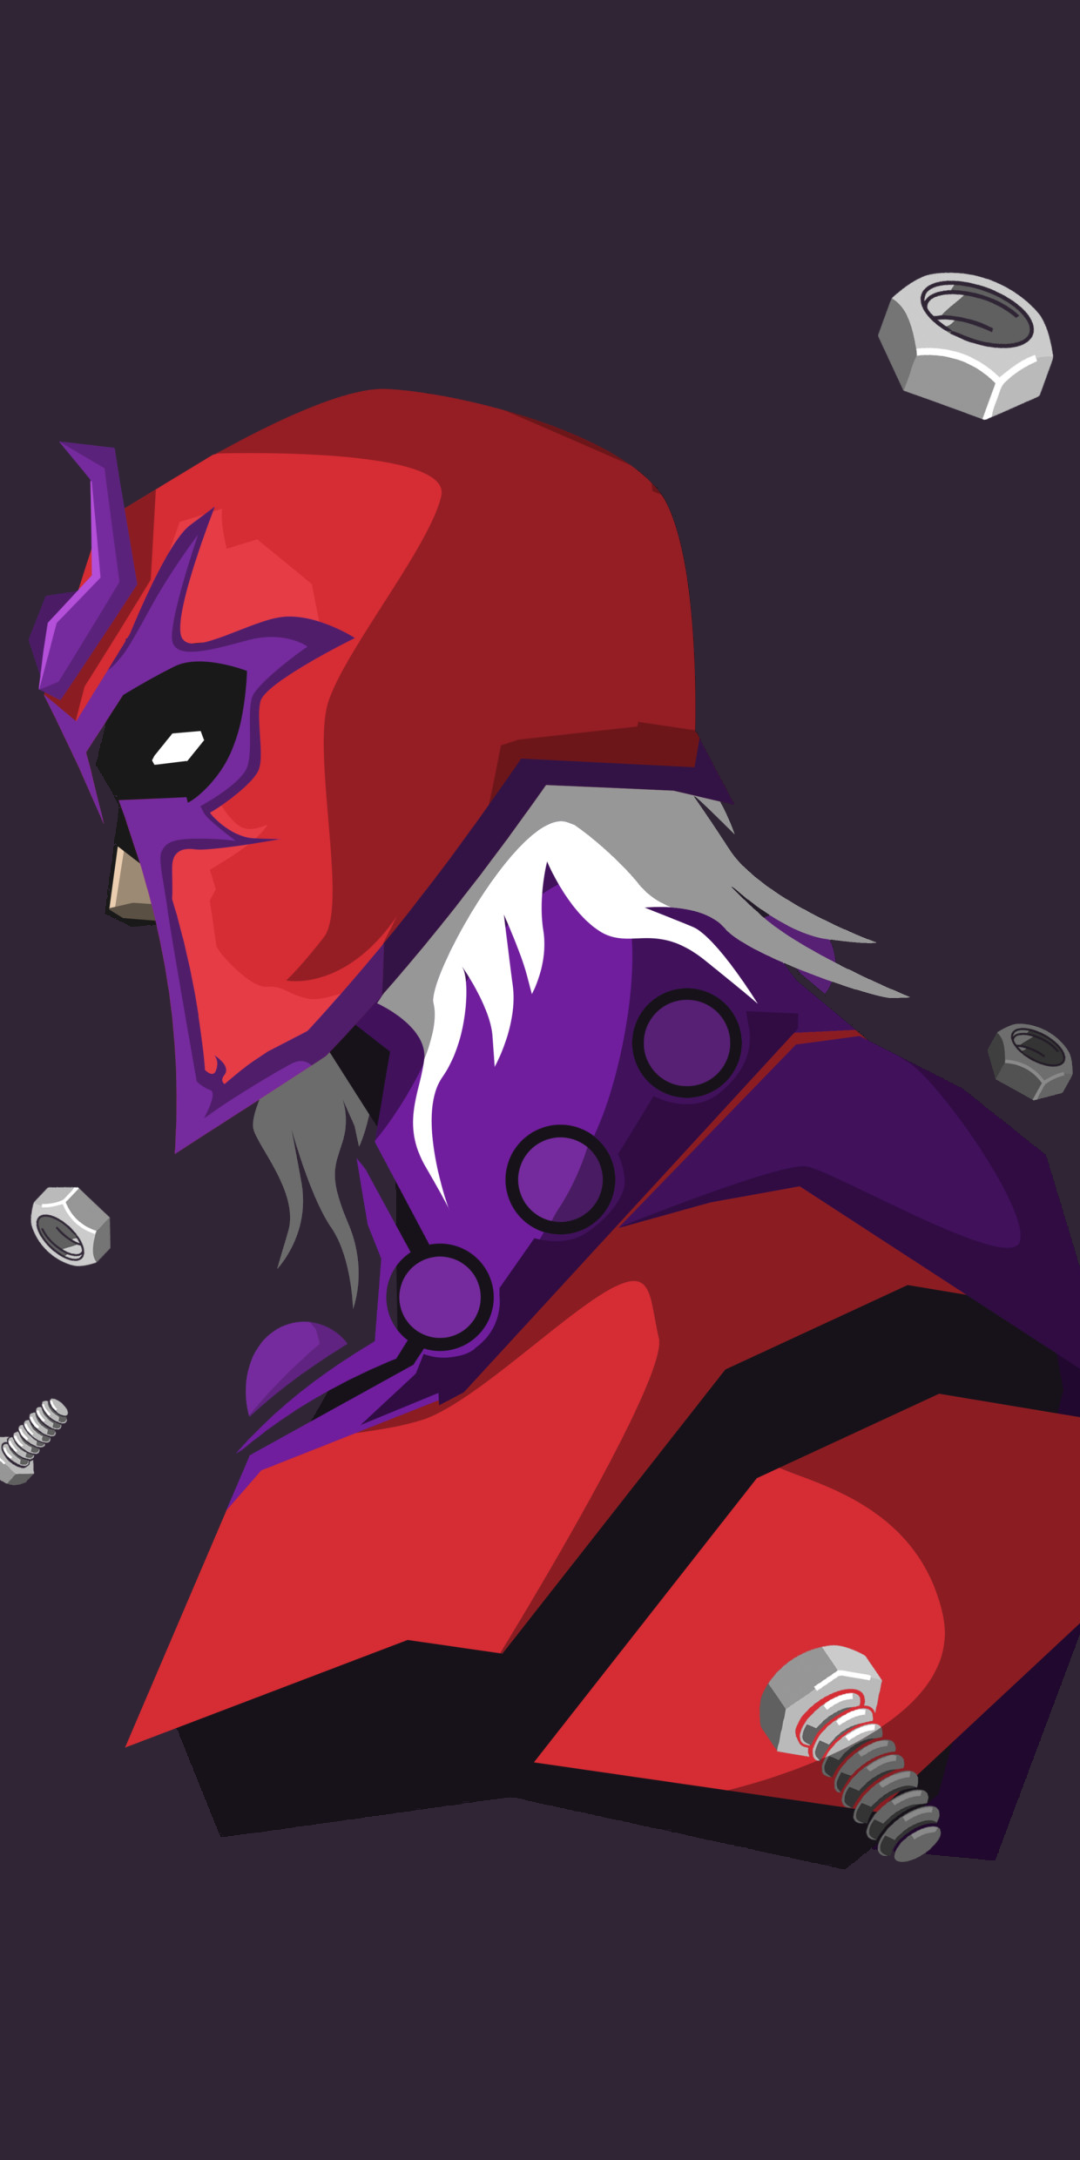 Magneto (comics) by BossLogic